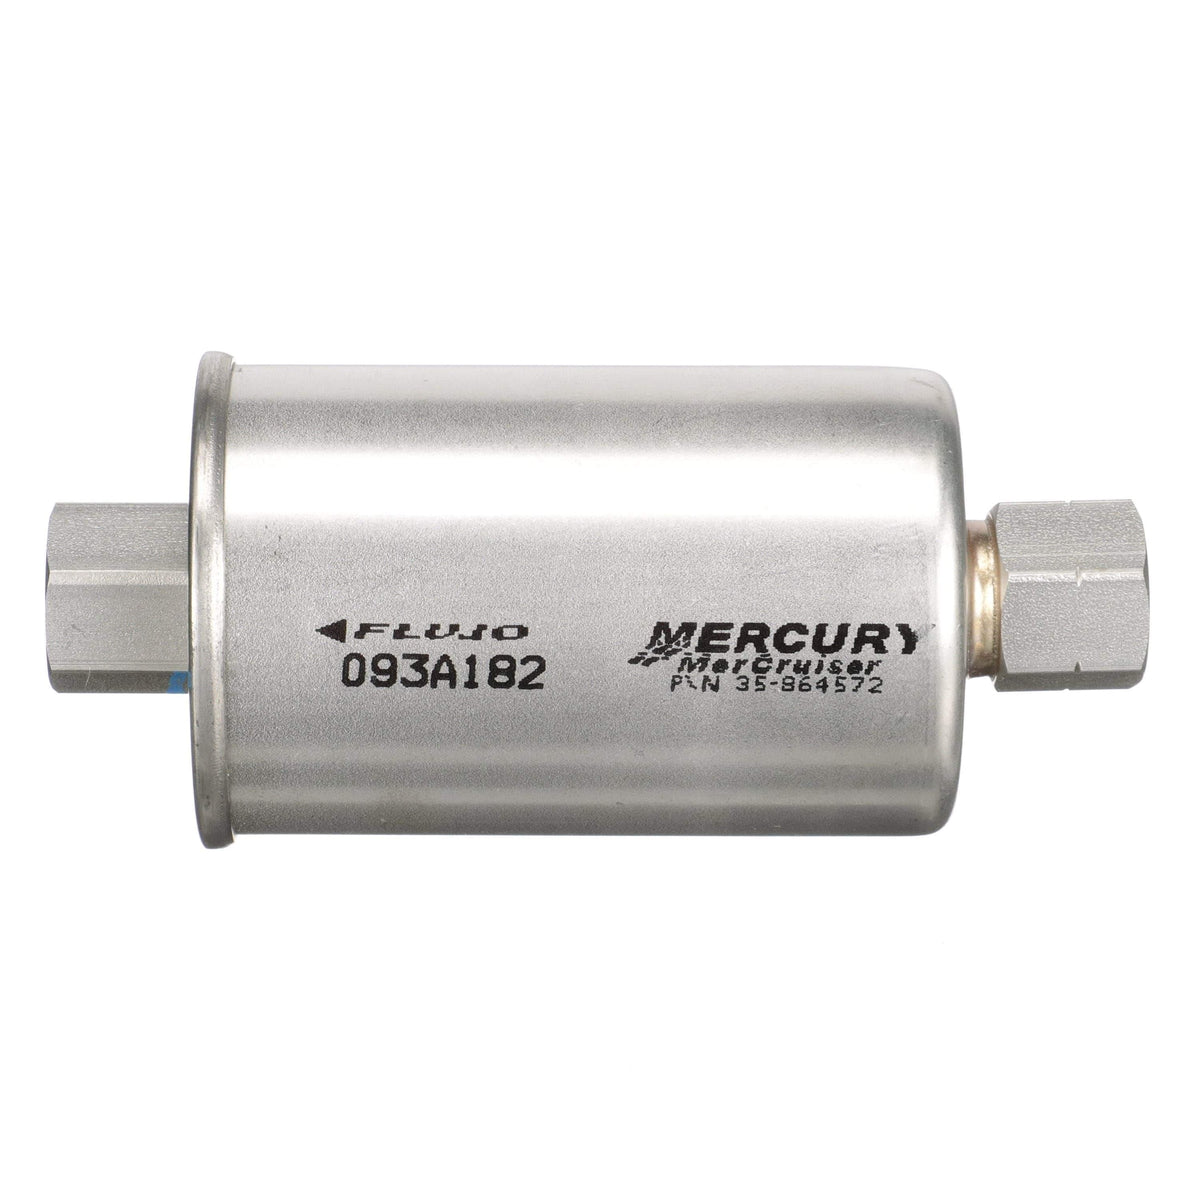 Mercury Marine Qualifies for Free Shipping Mercury Marine Fuel Filter #35-864572